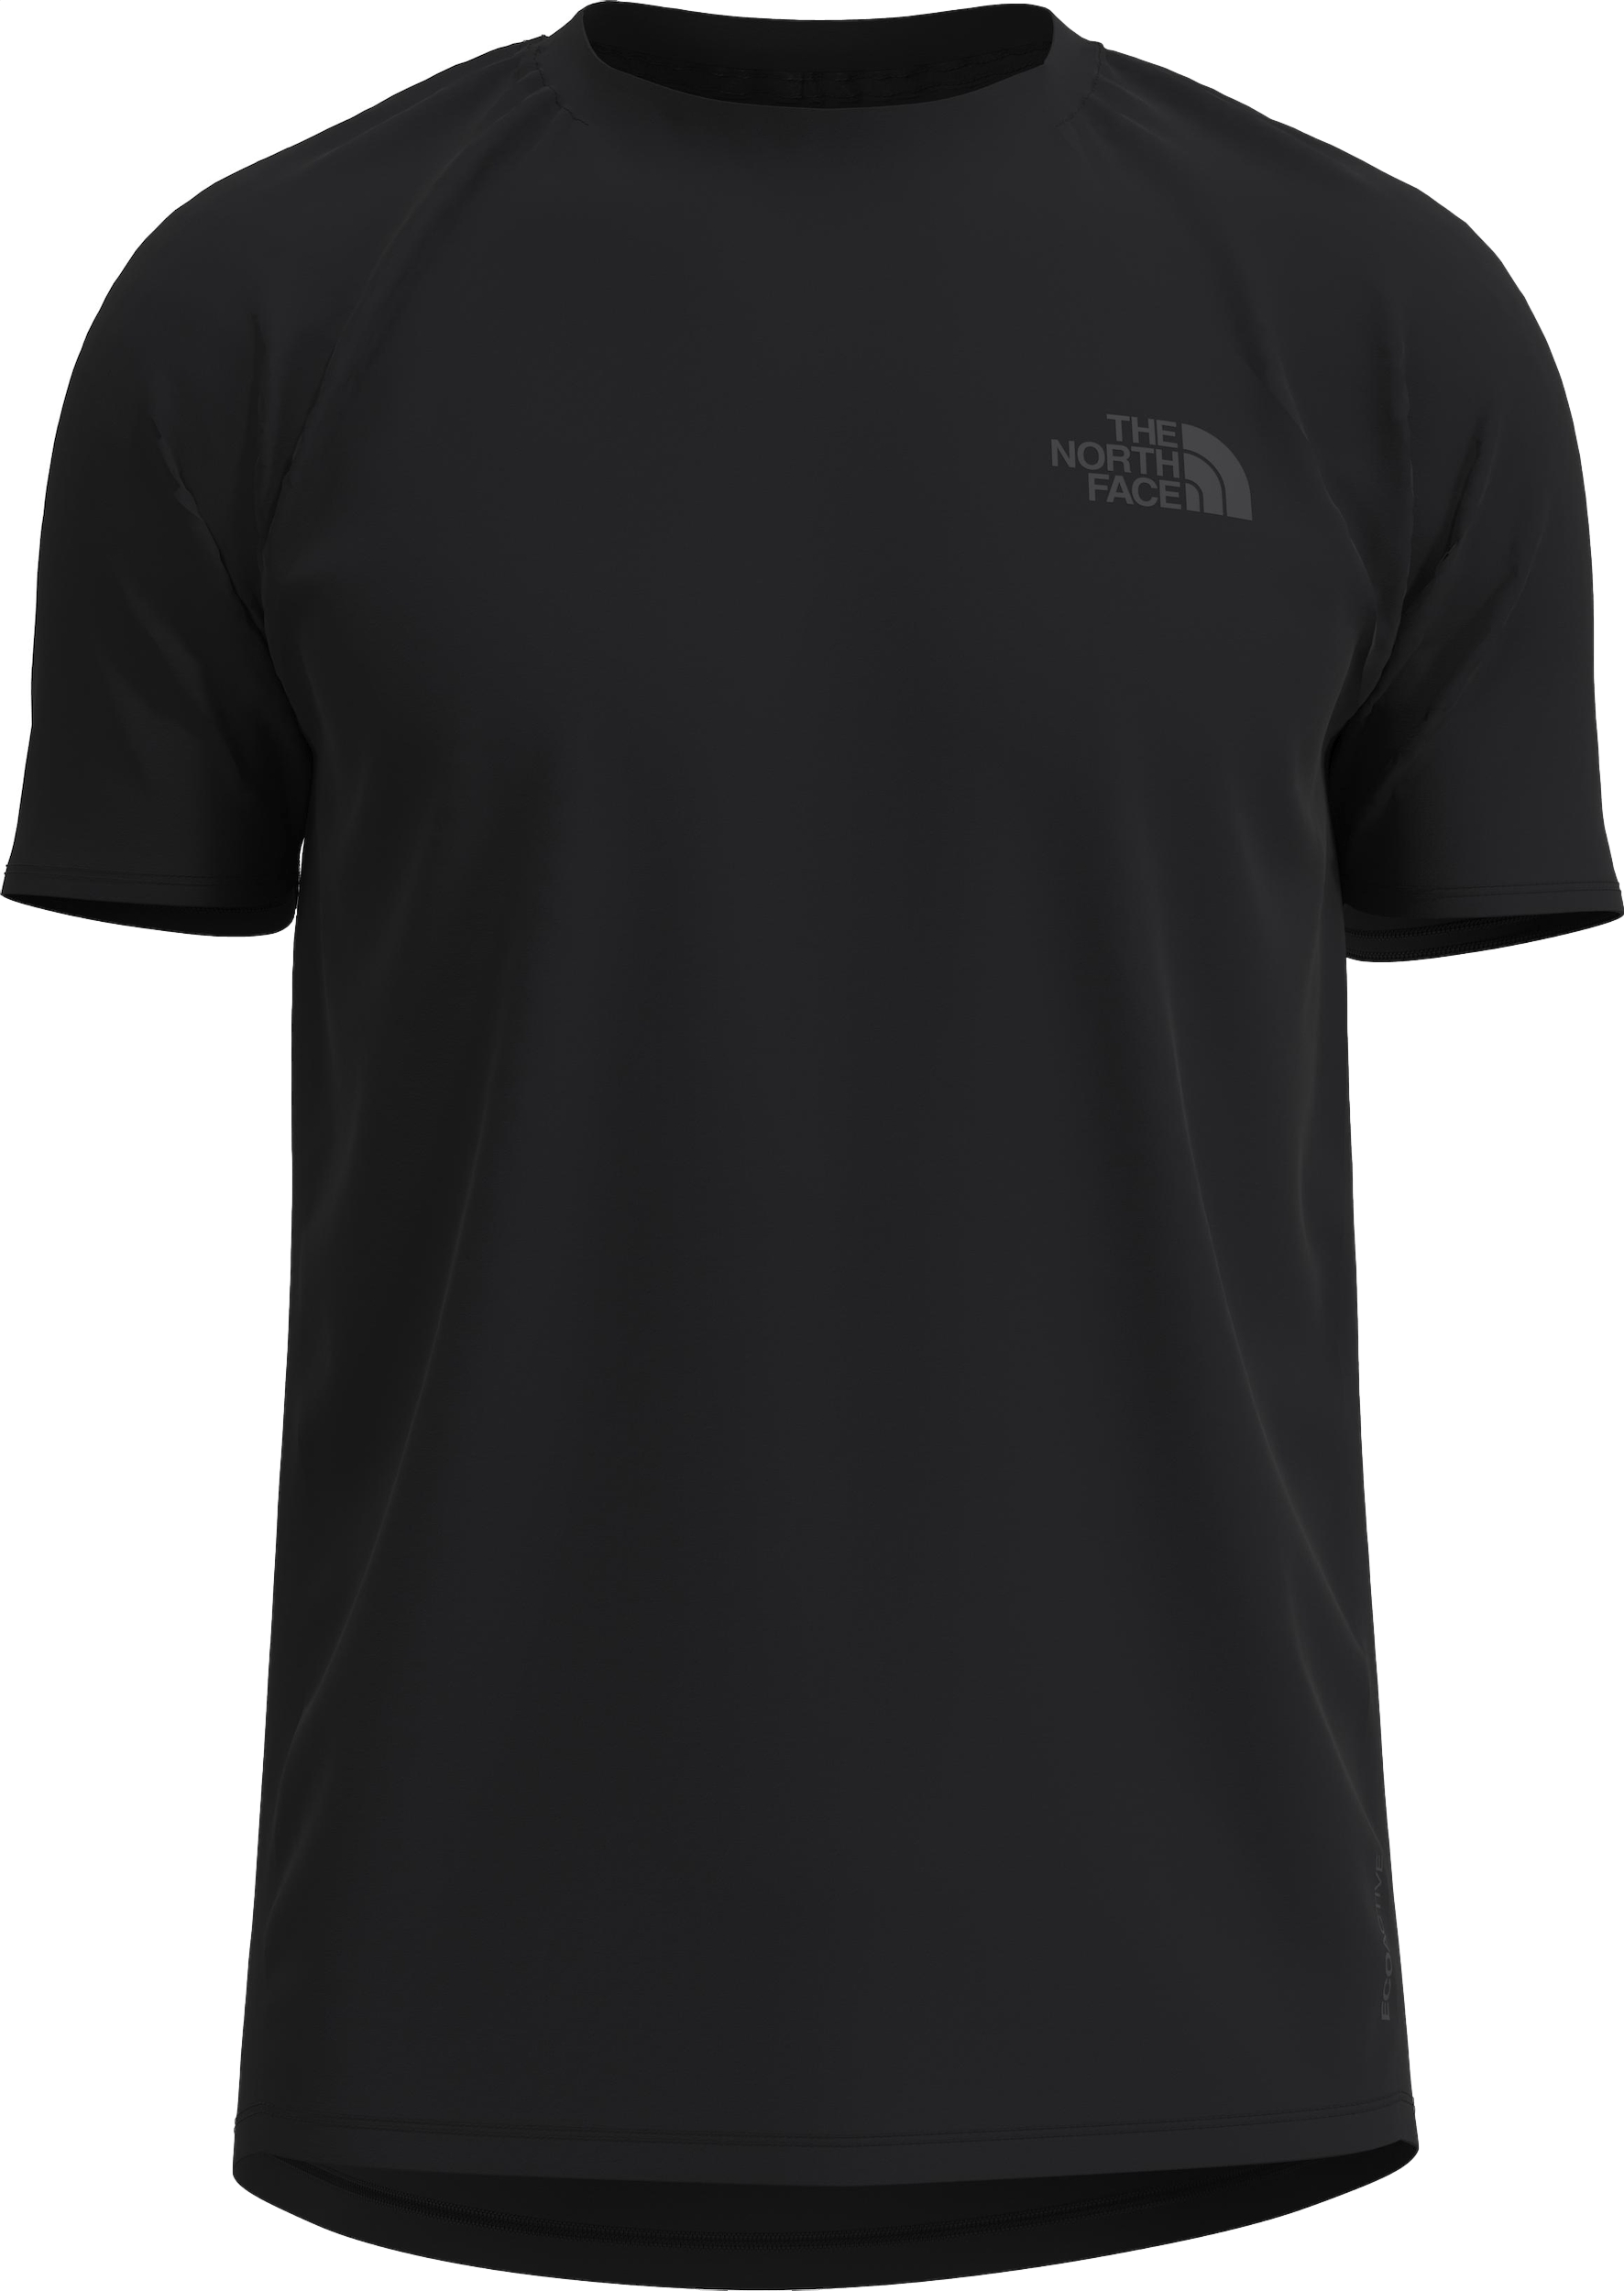 The North Face Men's EA Big Pine Short Sleeve Crew T-Shirt